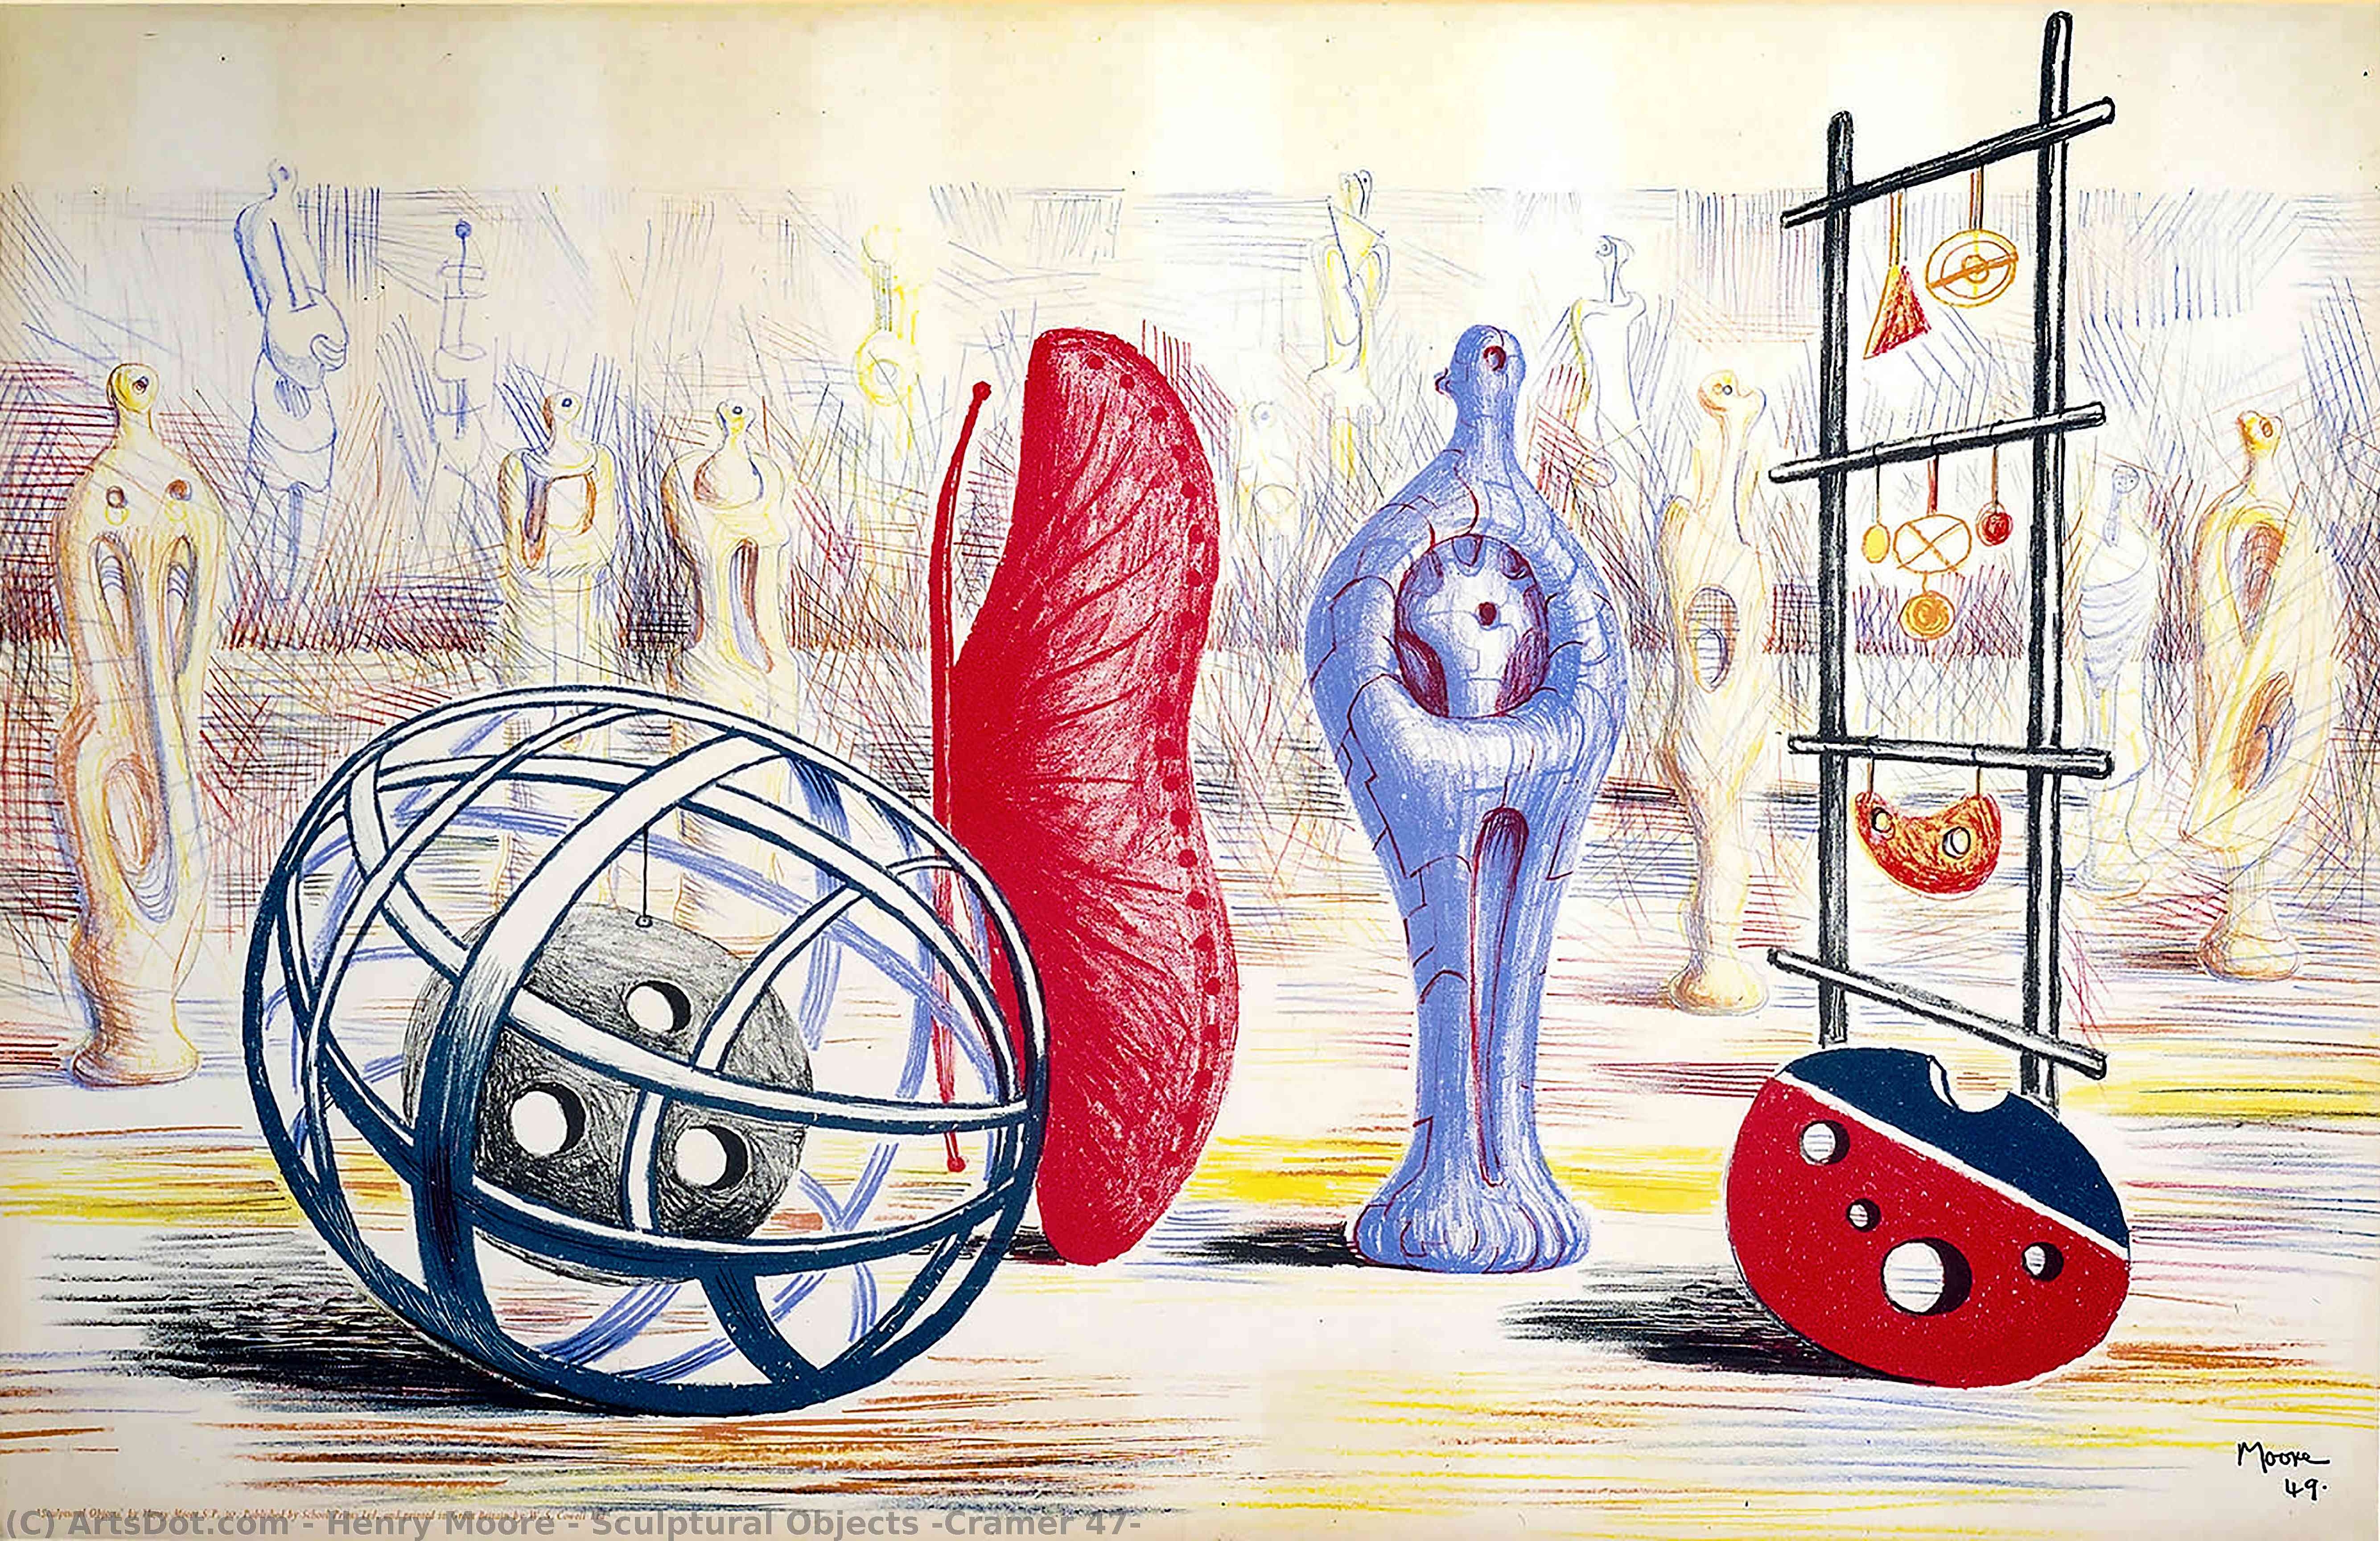 Wikioo.org - Encyklopedia Sztuk Pięknych - Malarstwo, Grafika Henry Moore - Sculptural Objects (Cramer 47)